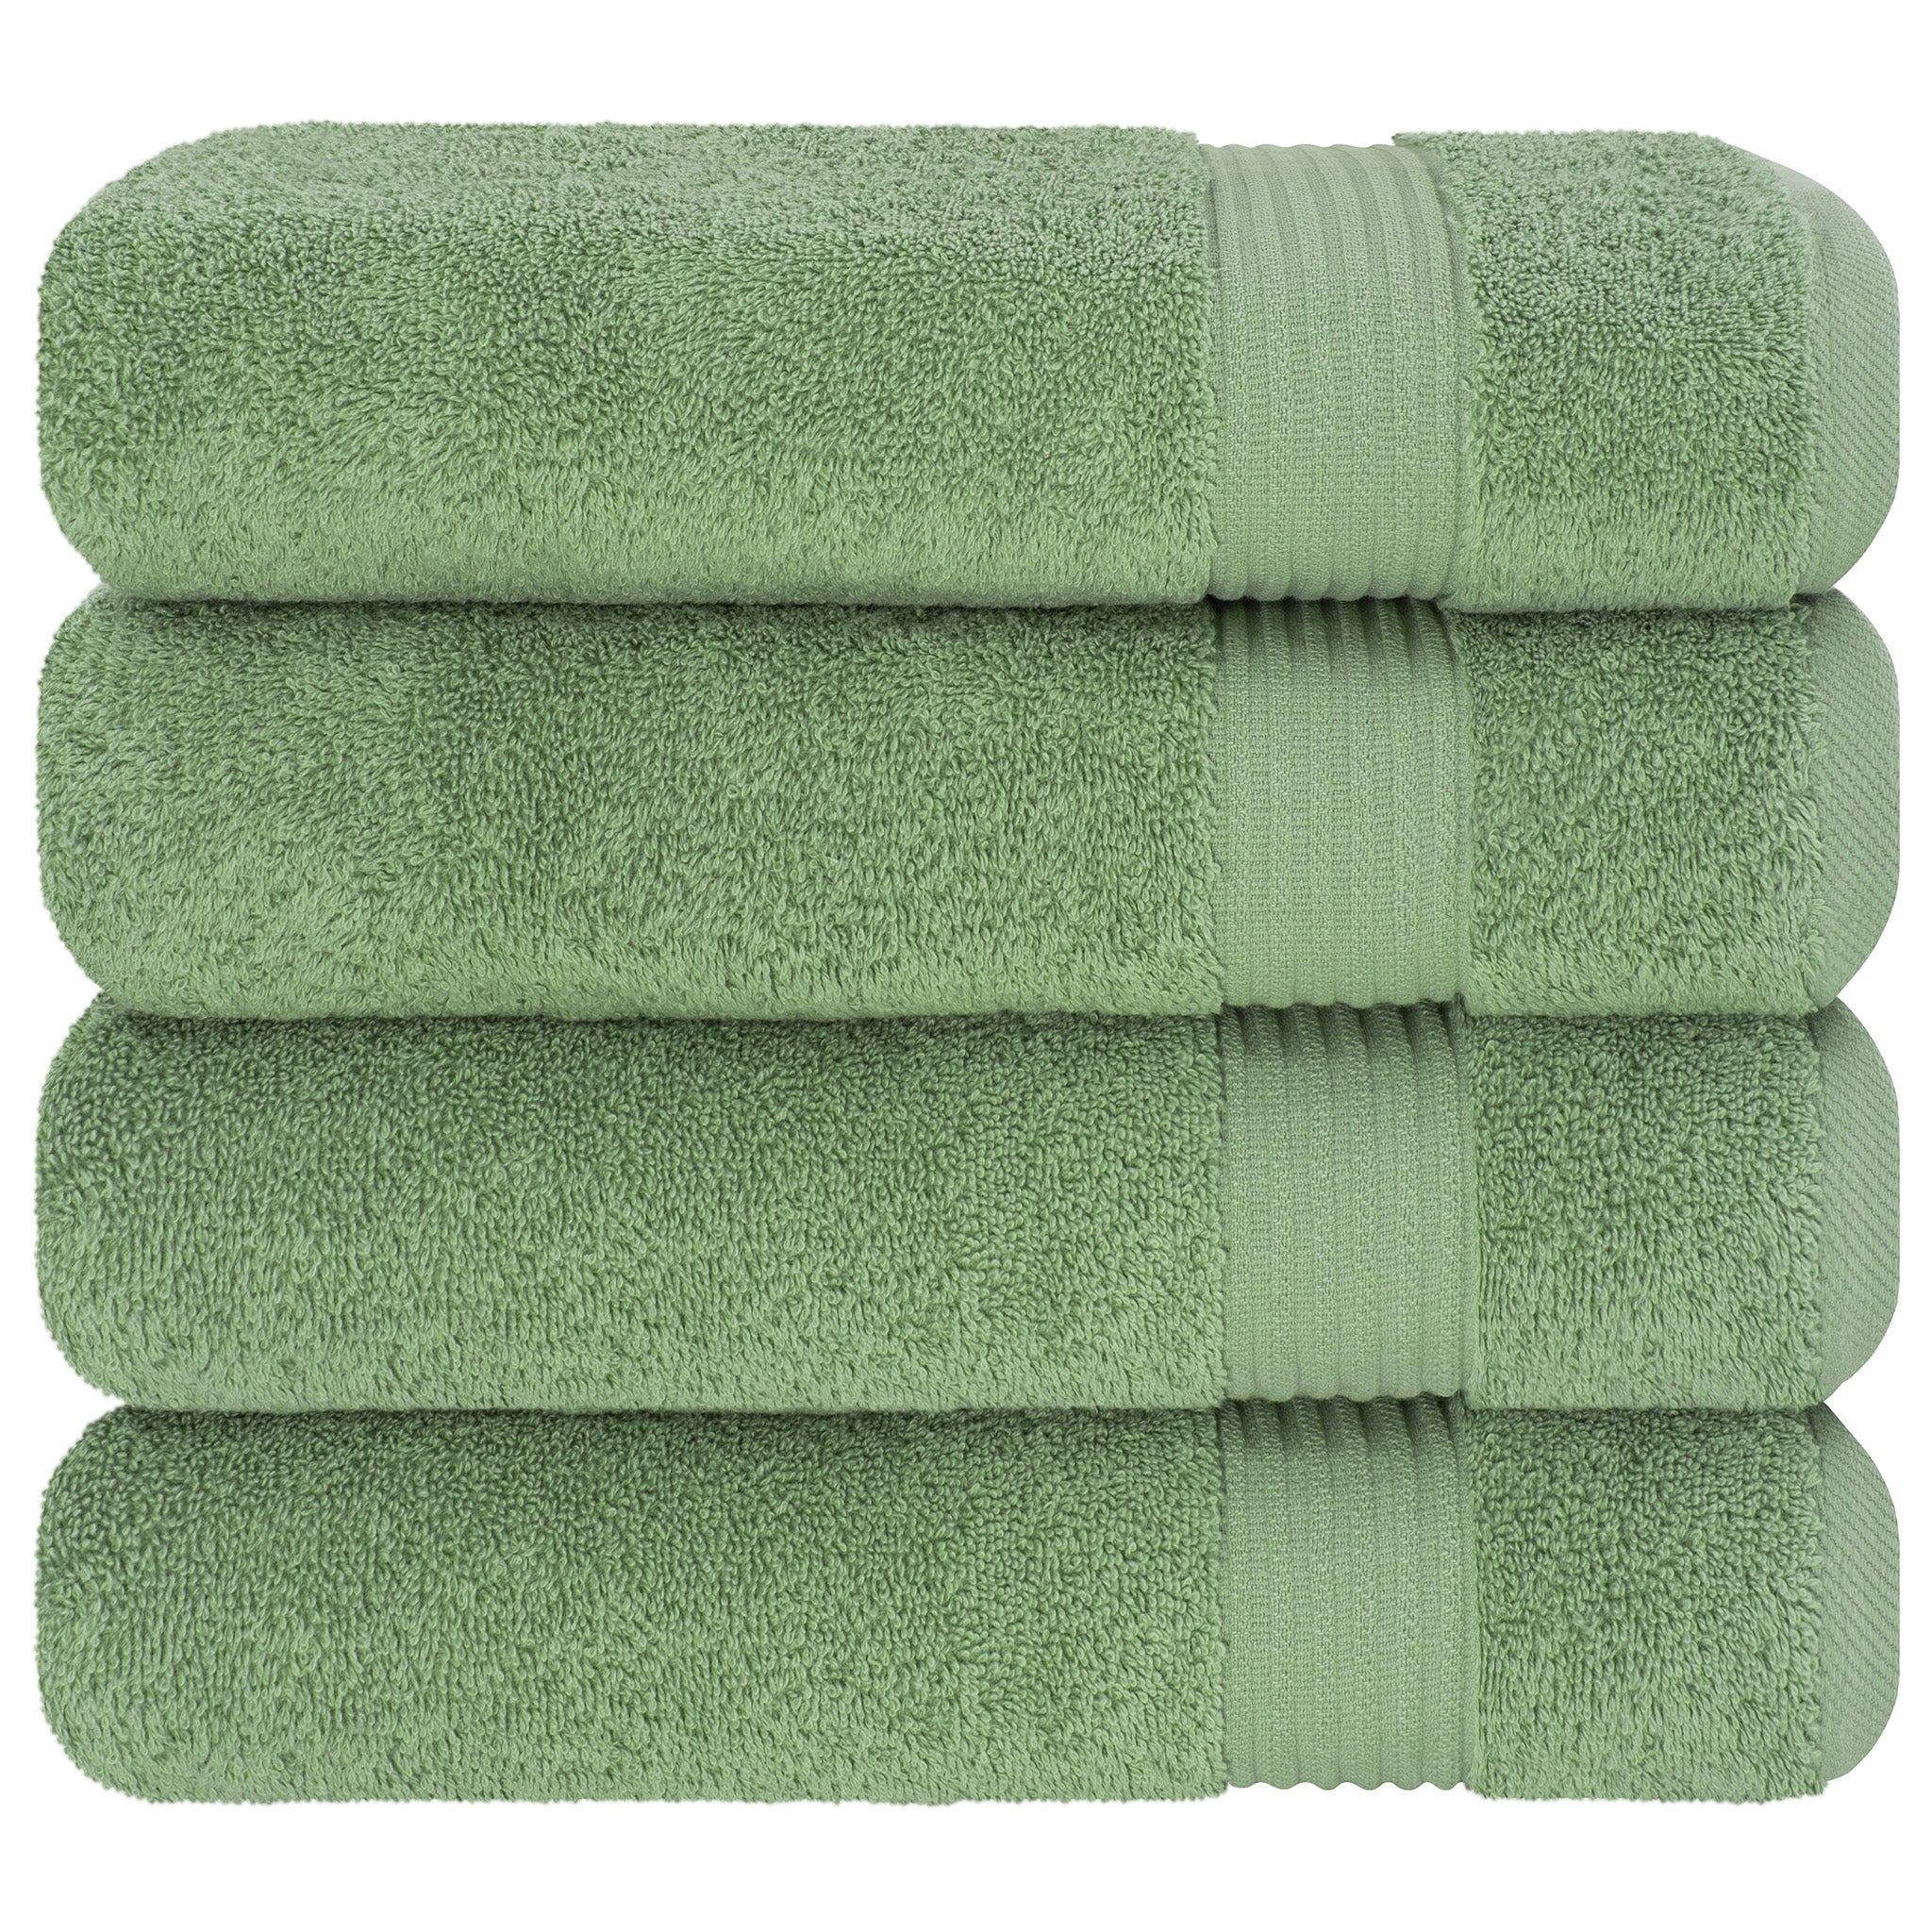 American Soft Linen Bekos 100% Cotton Turkish Towels, 4 Piece Bath Towel Set -sage-green-06